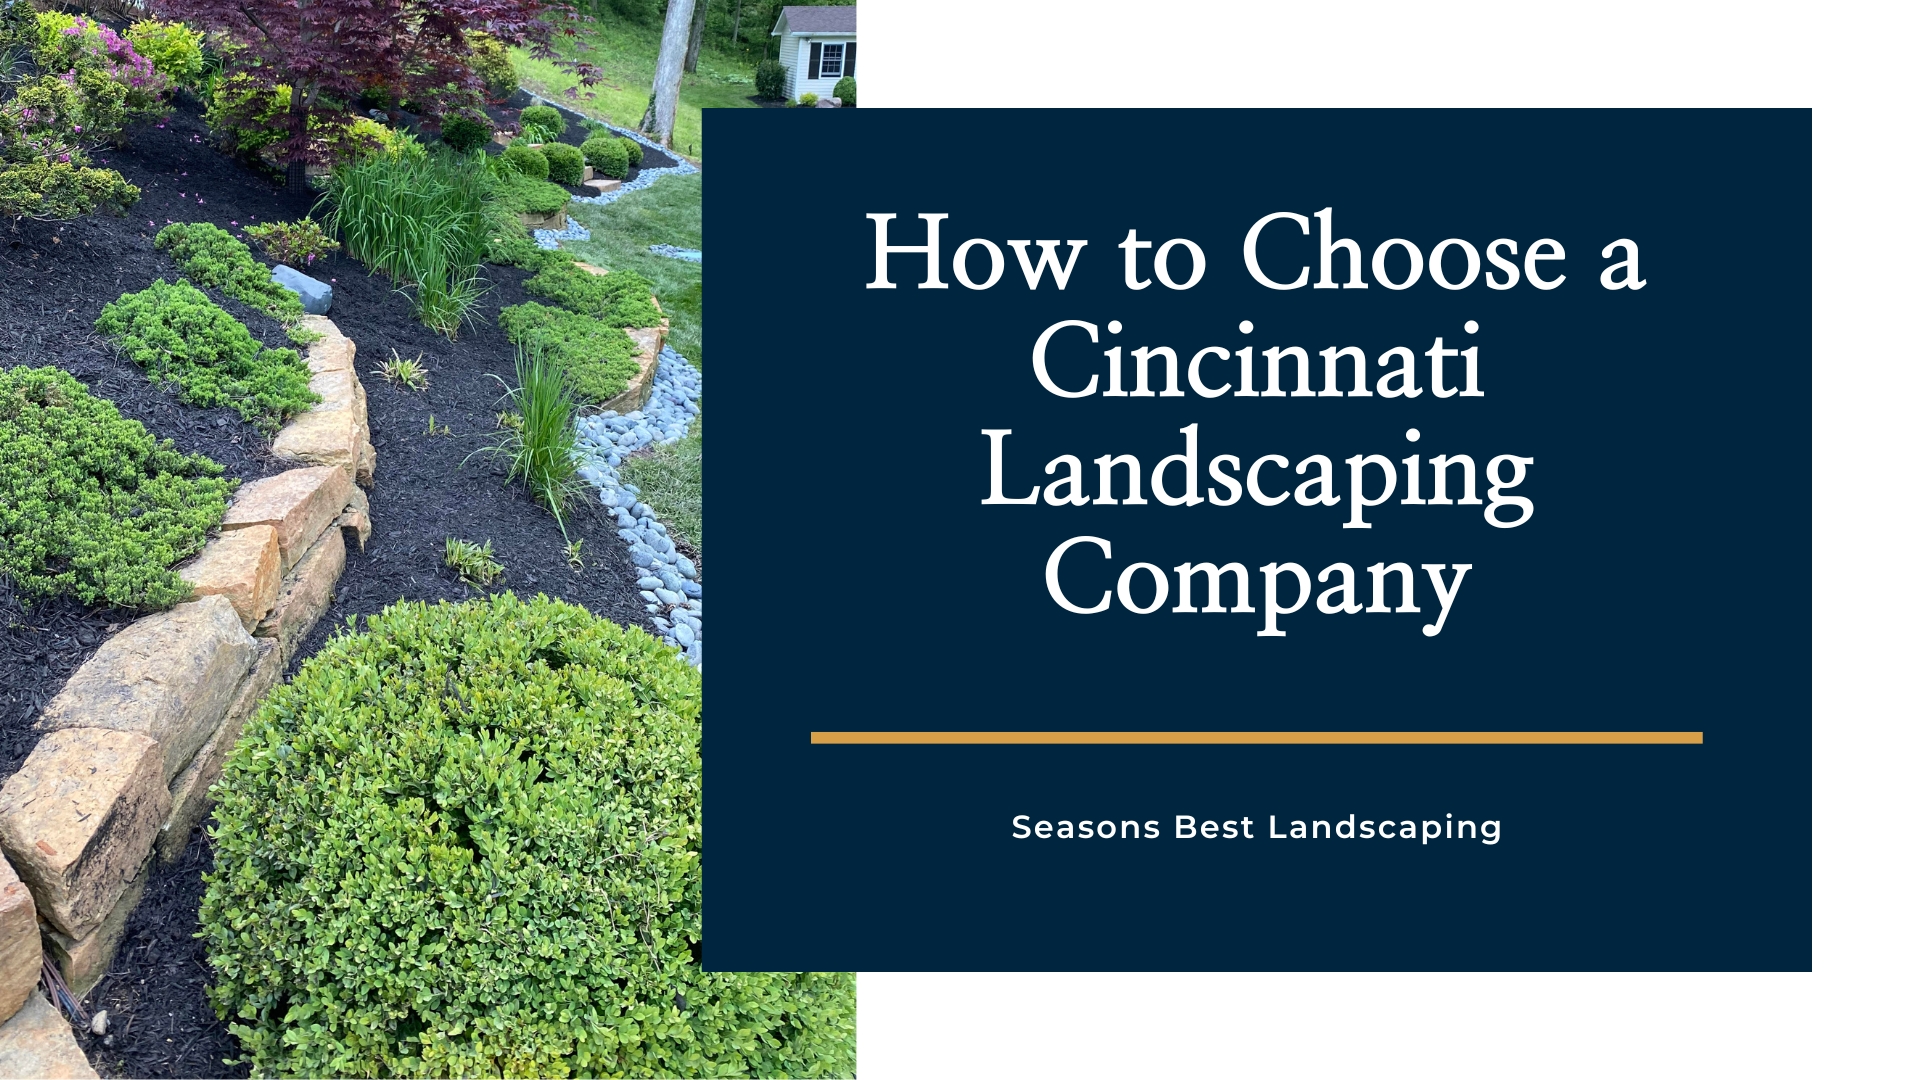 Cincinnati Ohio Landscaping Blog Image Blog Image Seasons Best Landscaping